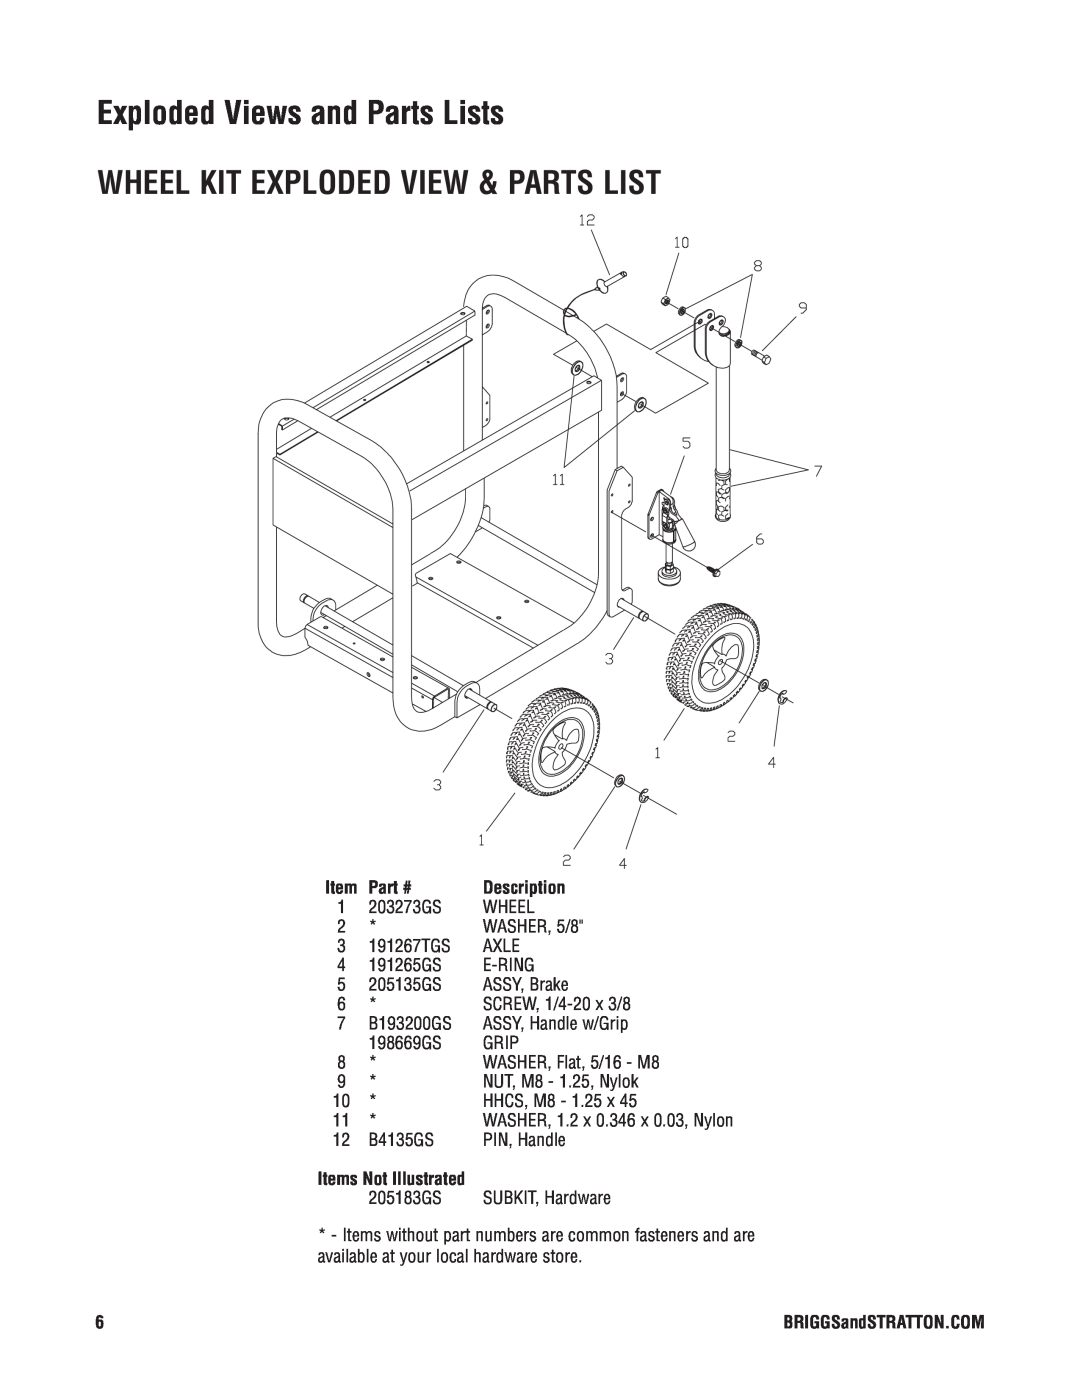 Briggs & Stratton PRO 10000 Wheel Kit Exploded View & Parts List, Exploded Views and Parts Lists, Part #, Description 